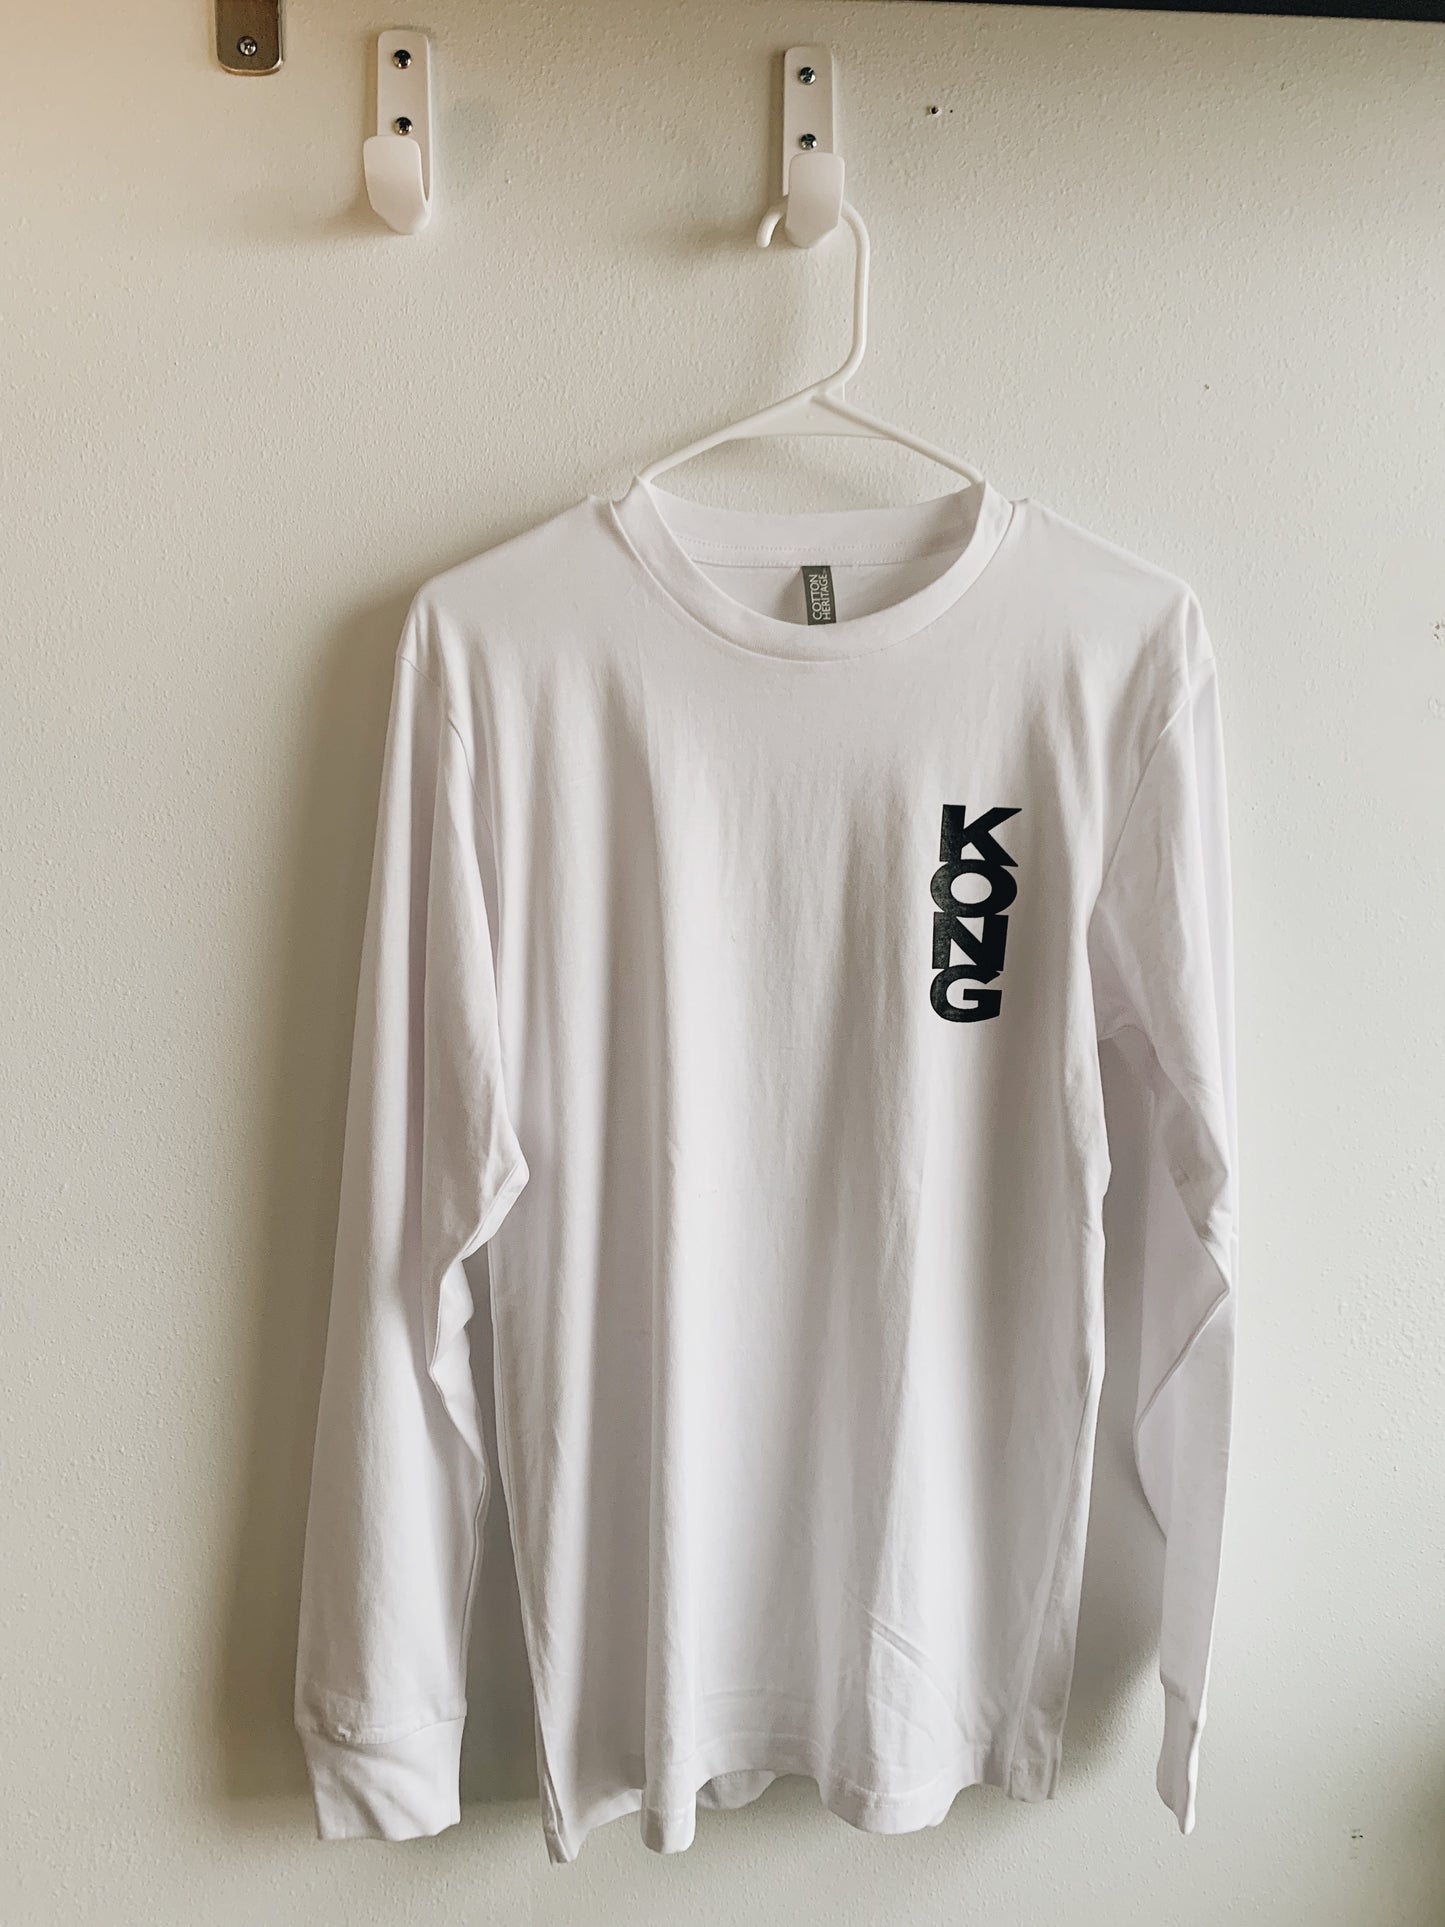 Kong Long Sleeve Shirt - White